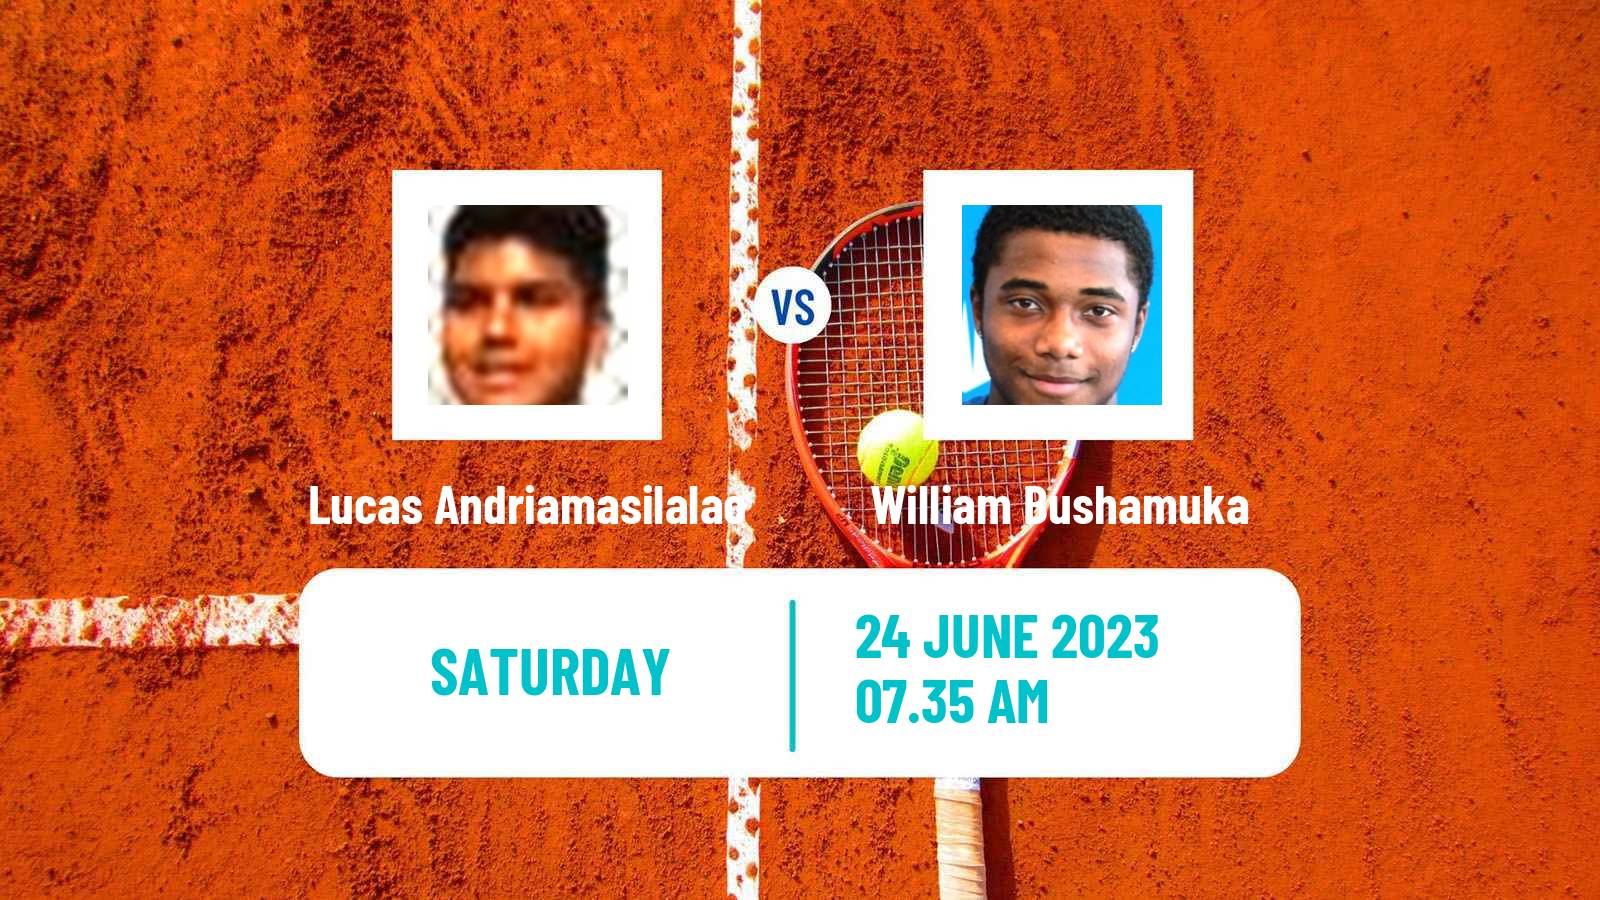 Tennis Davis Cup Group V Lucas Andriamasilalao - William Bushamuka